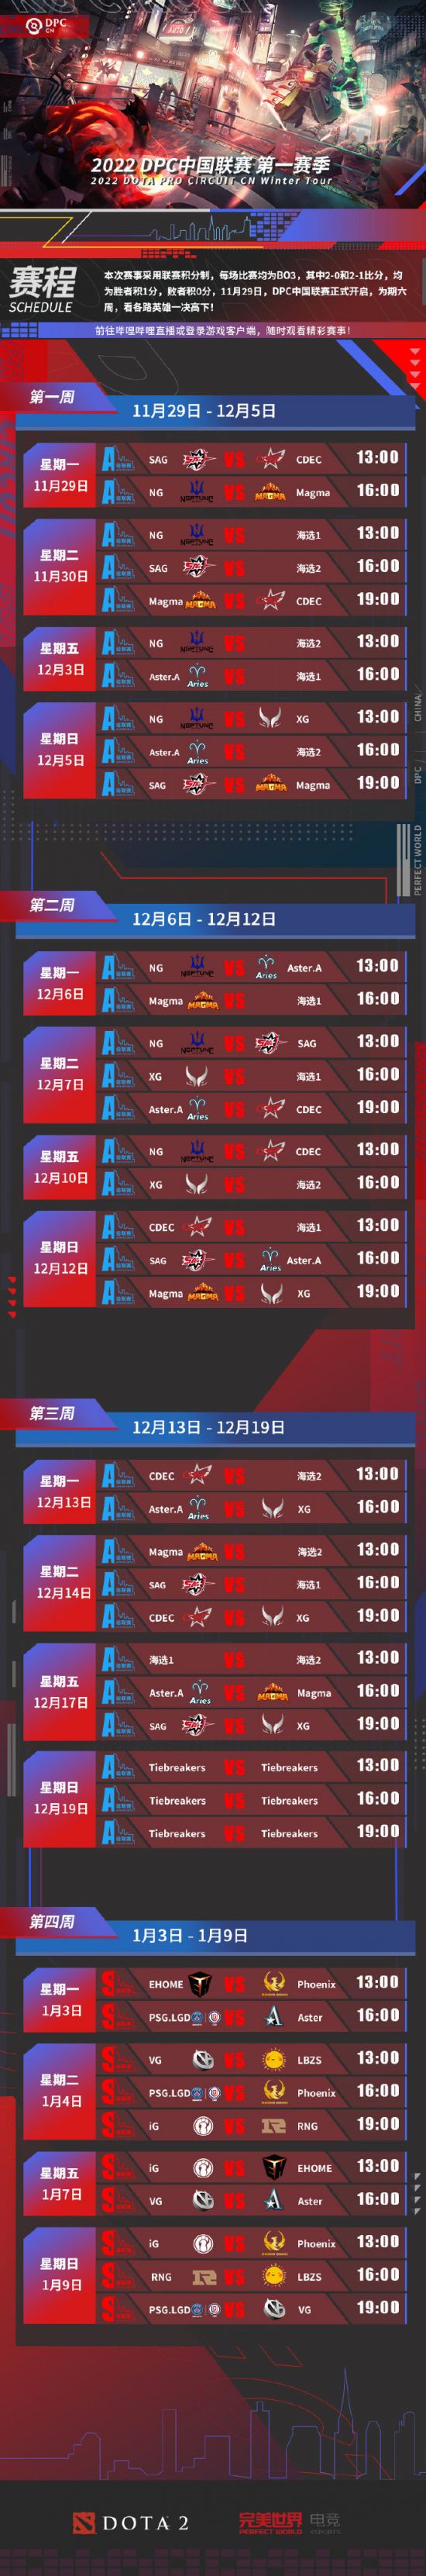 DPC中国联赛第一赛季比赛由B站独家播出